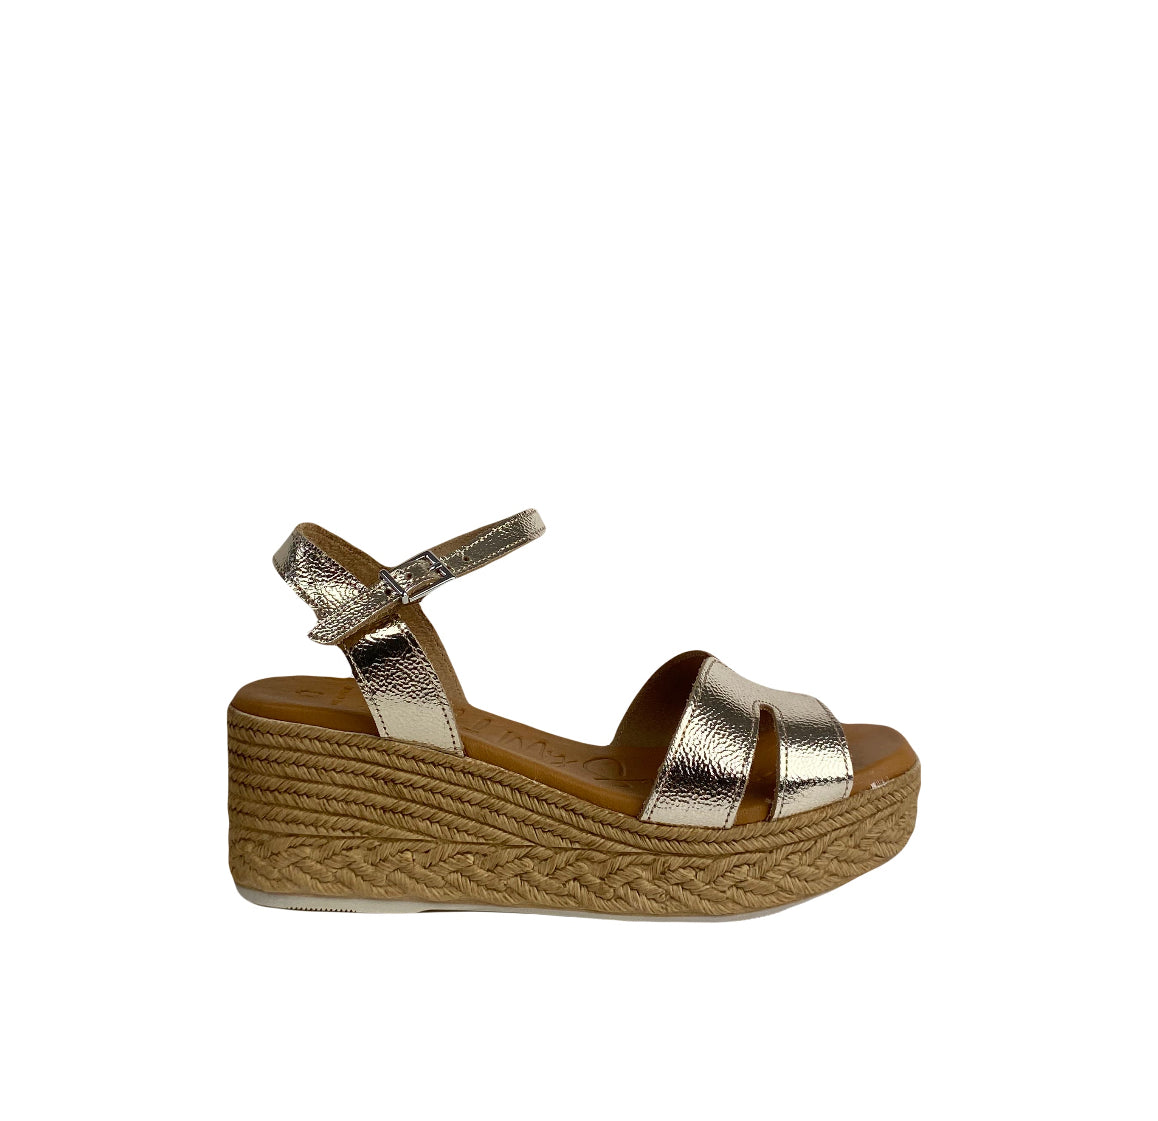 Oh My Sandals - 5451 Gold Metallic Wedge Sandal